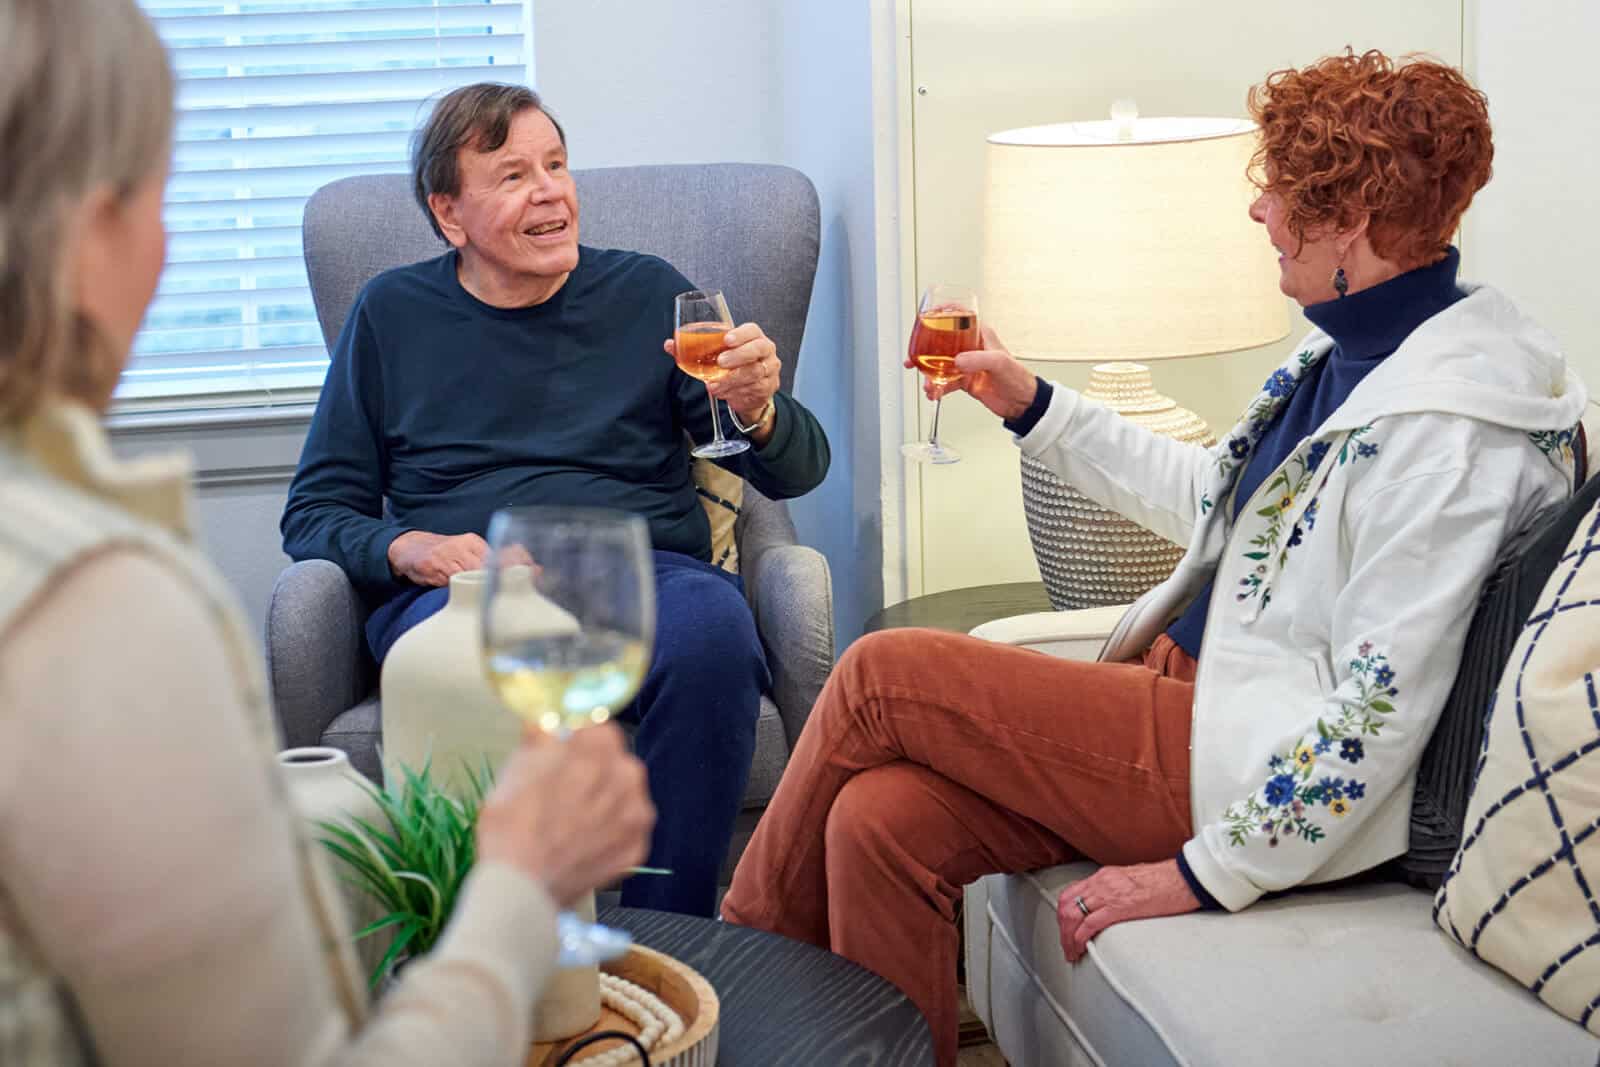 Residents enjoying good conversation and wine